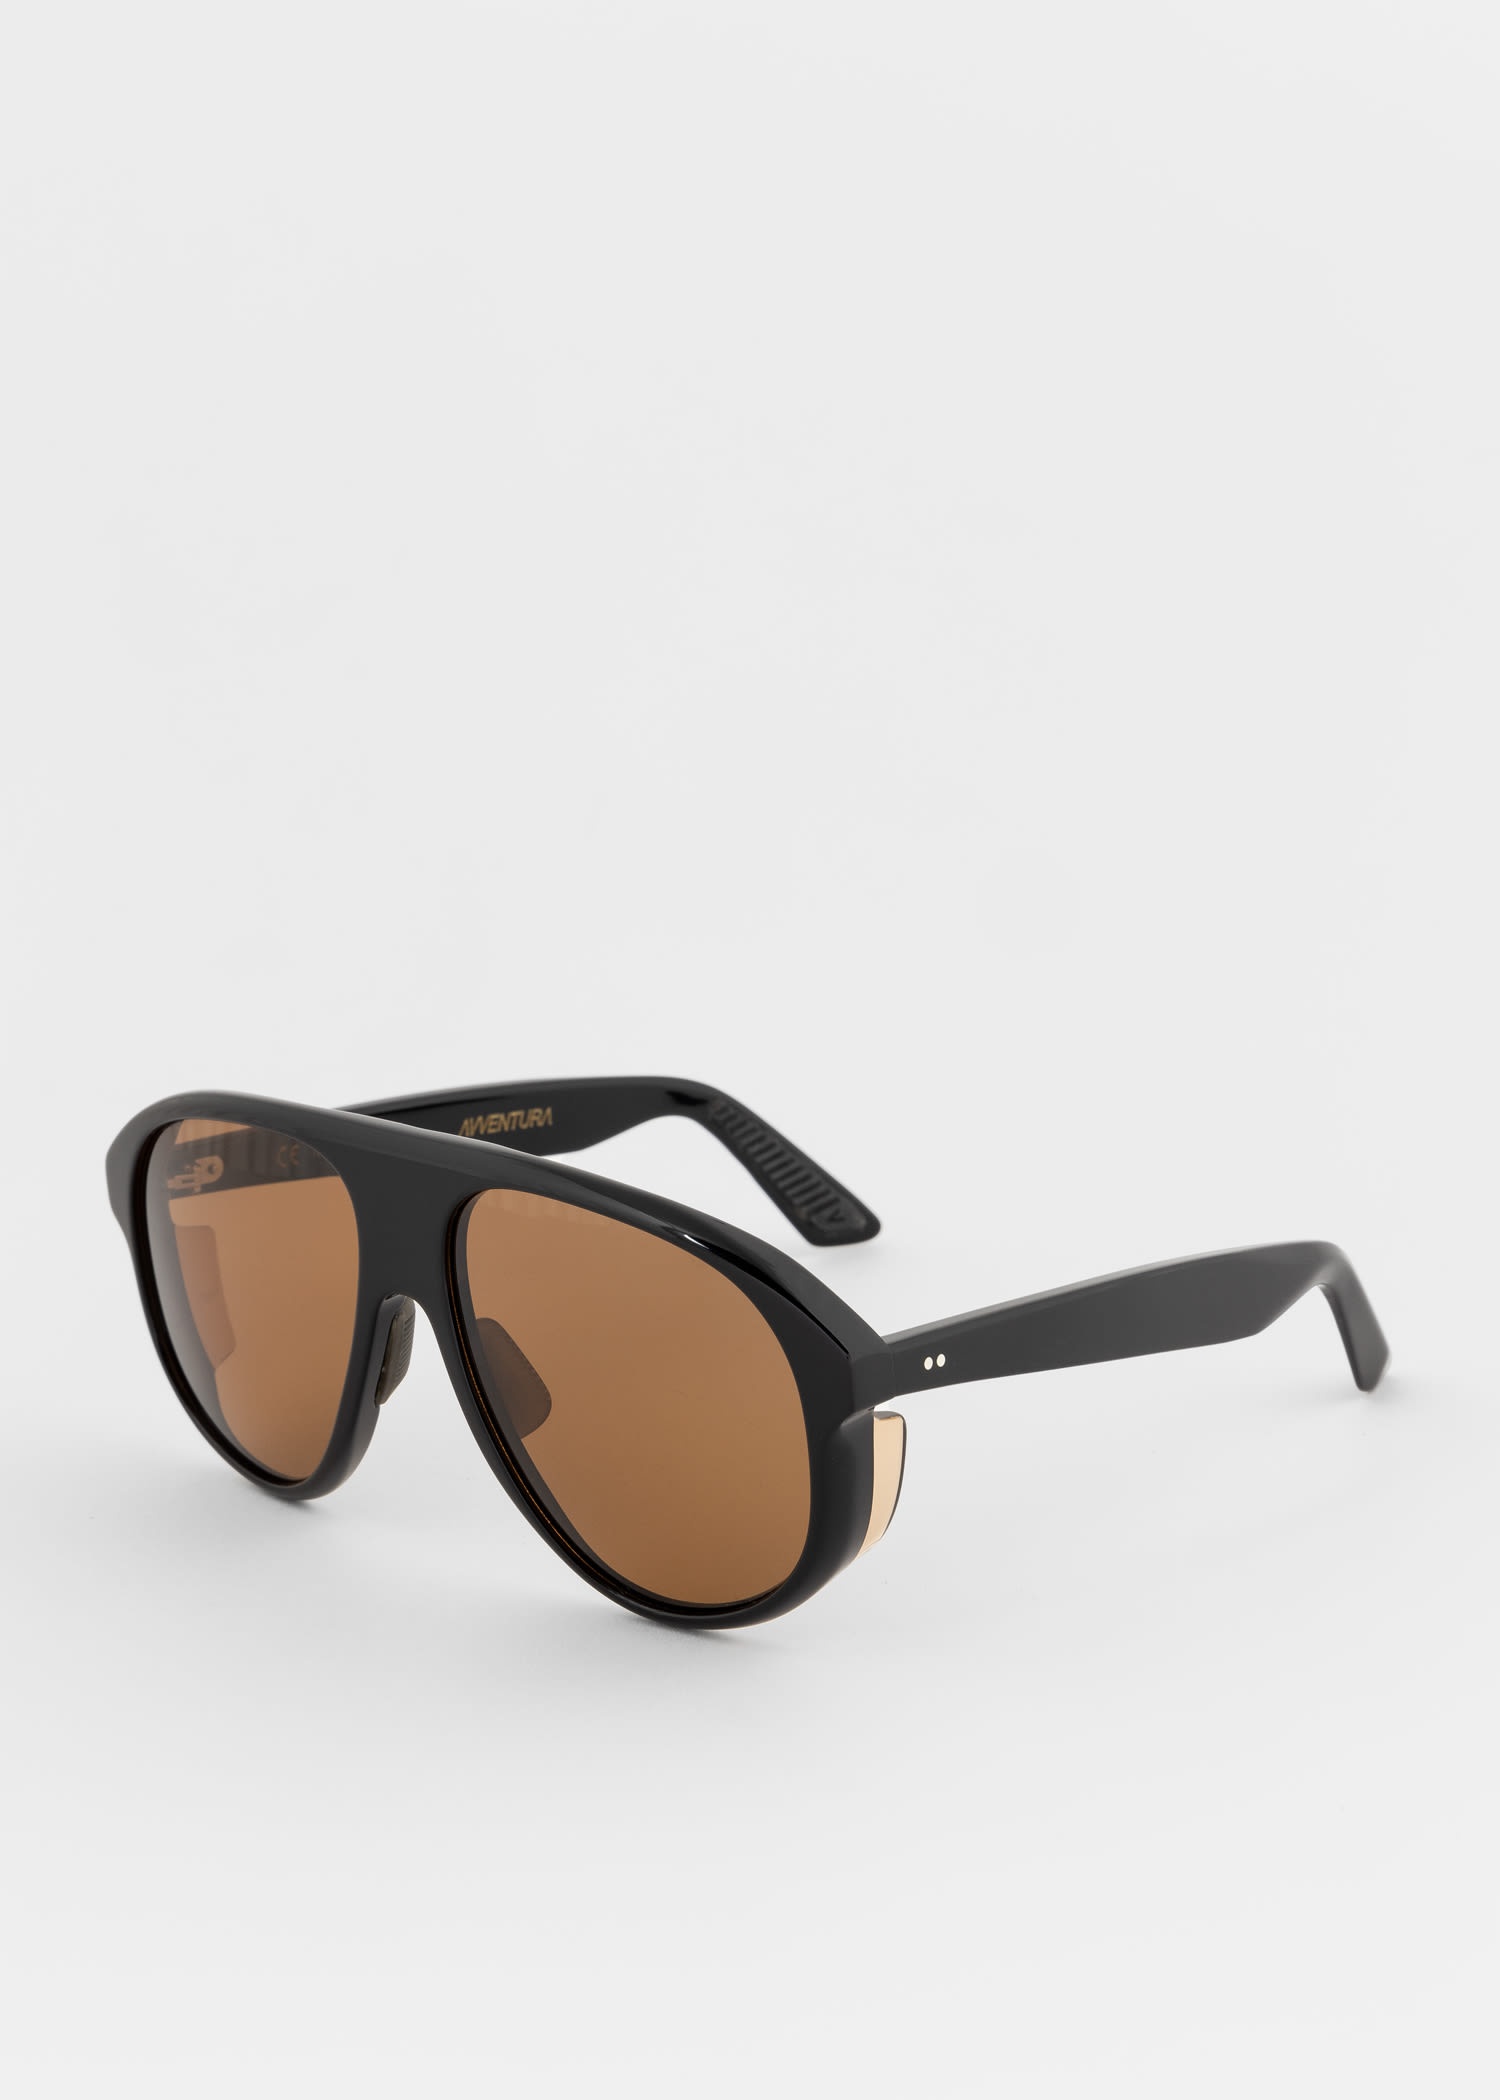 'Stelvio Noir' Sunglasses by Avventura - 2